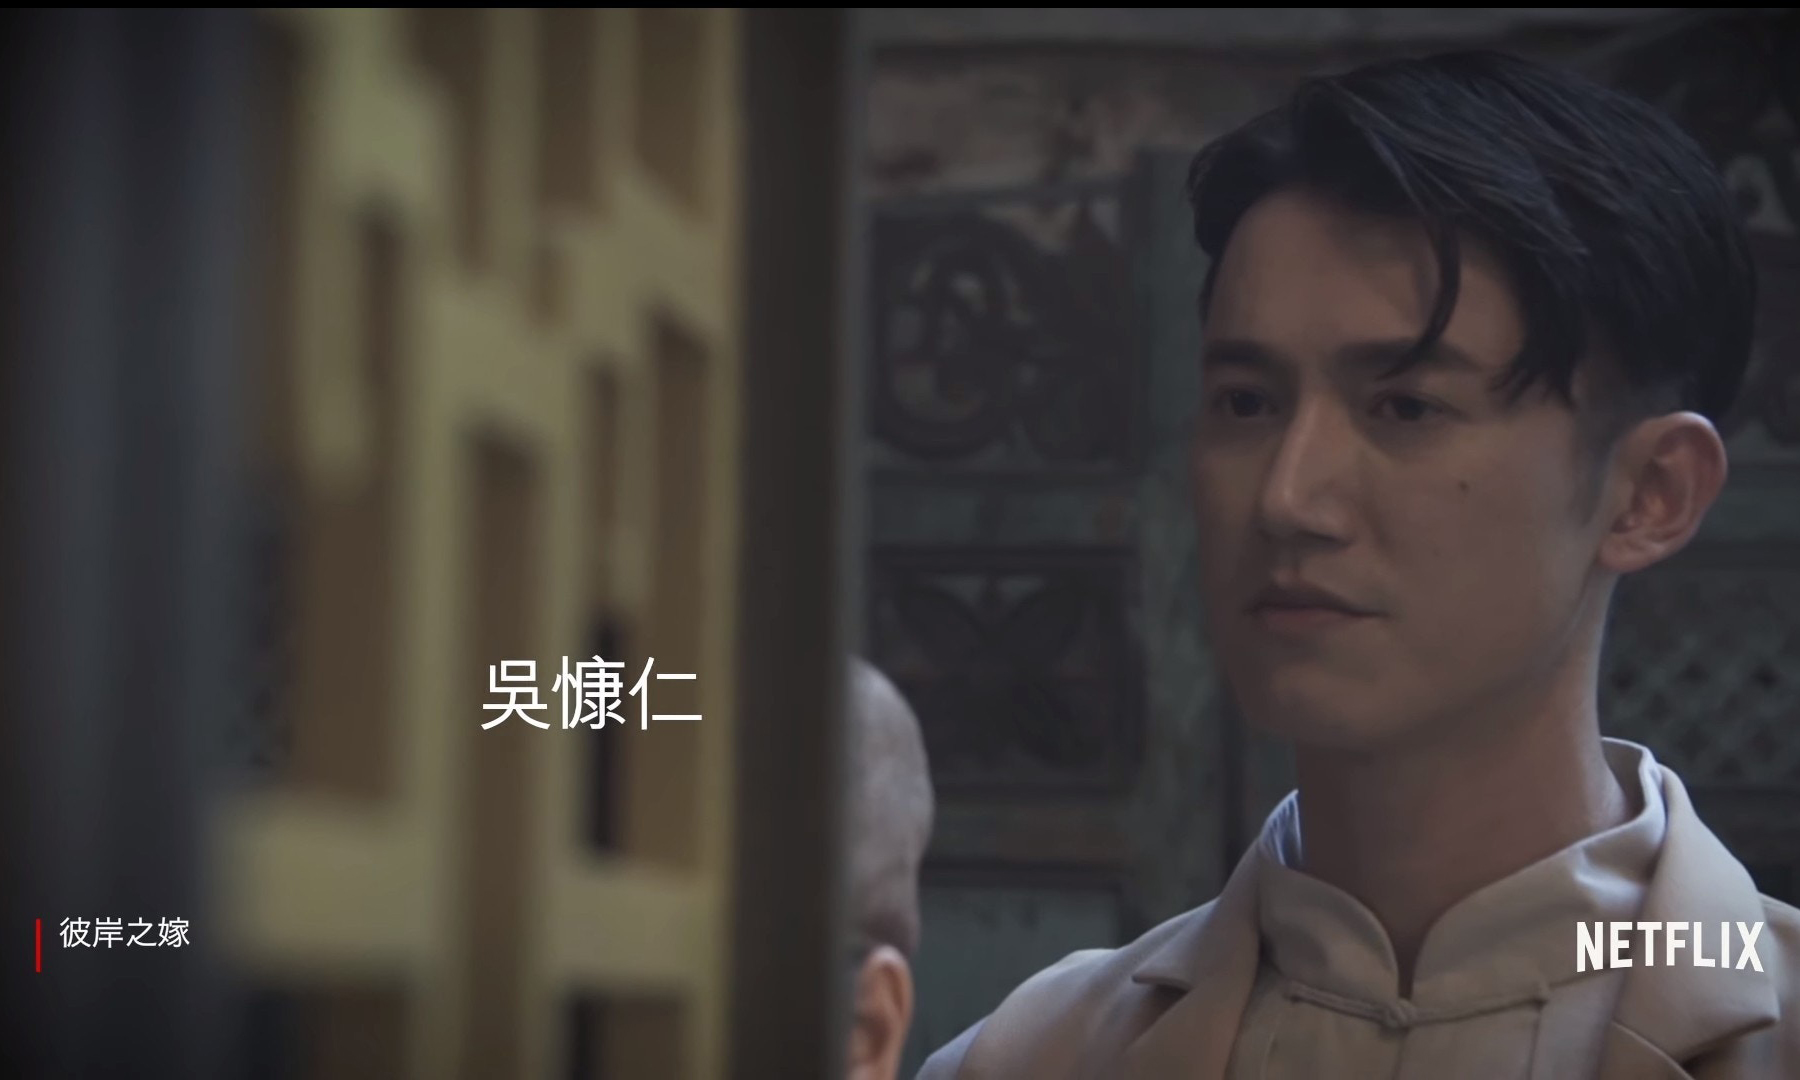 Netflix 制作华语恐怖剧《彼岸之嫁》定档明年 1 月